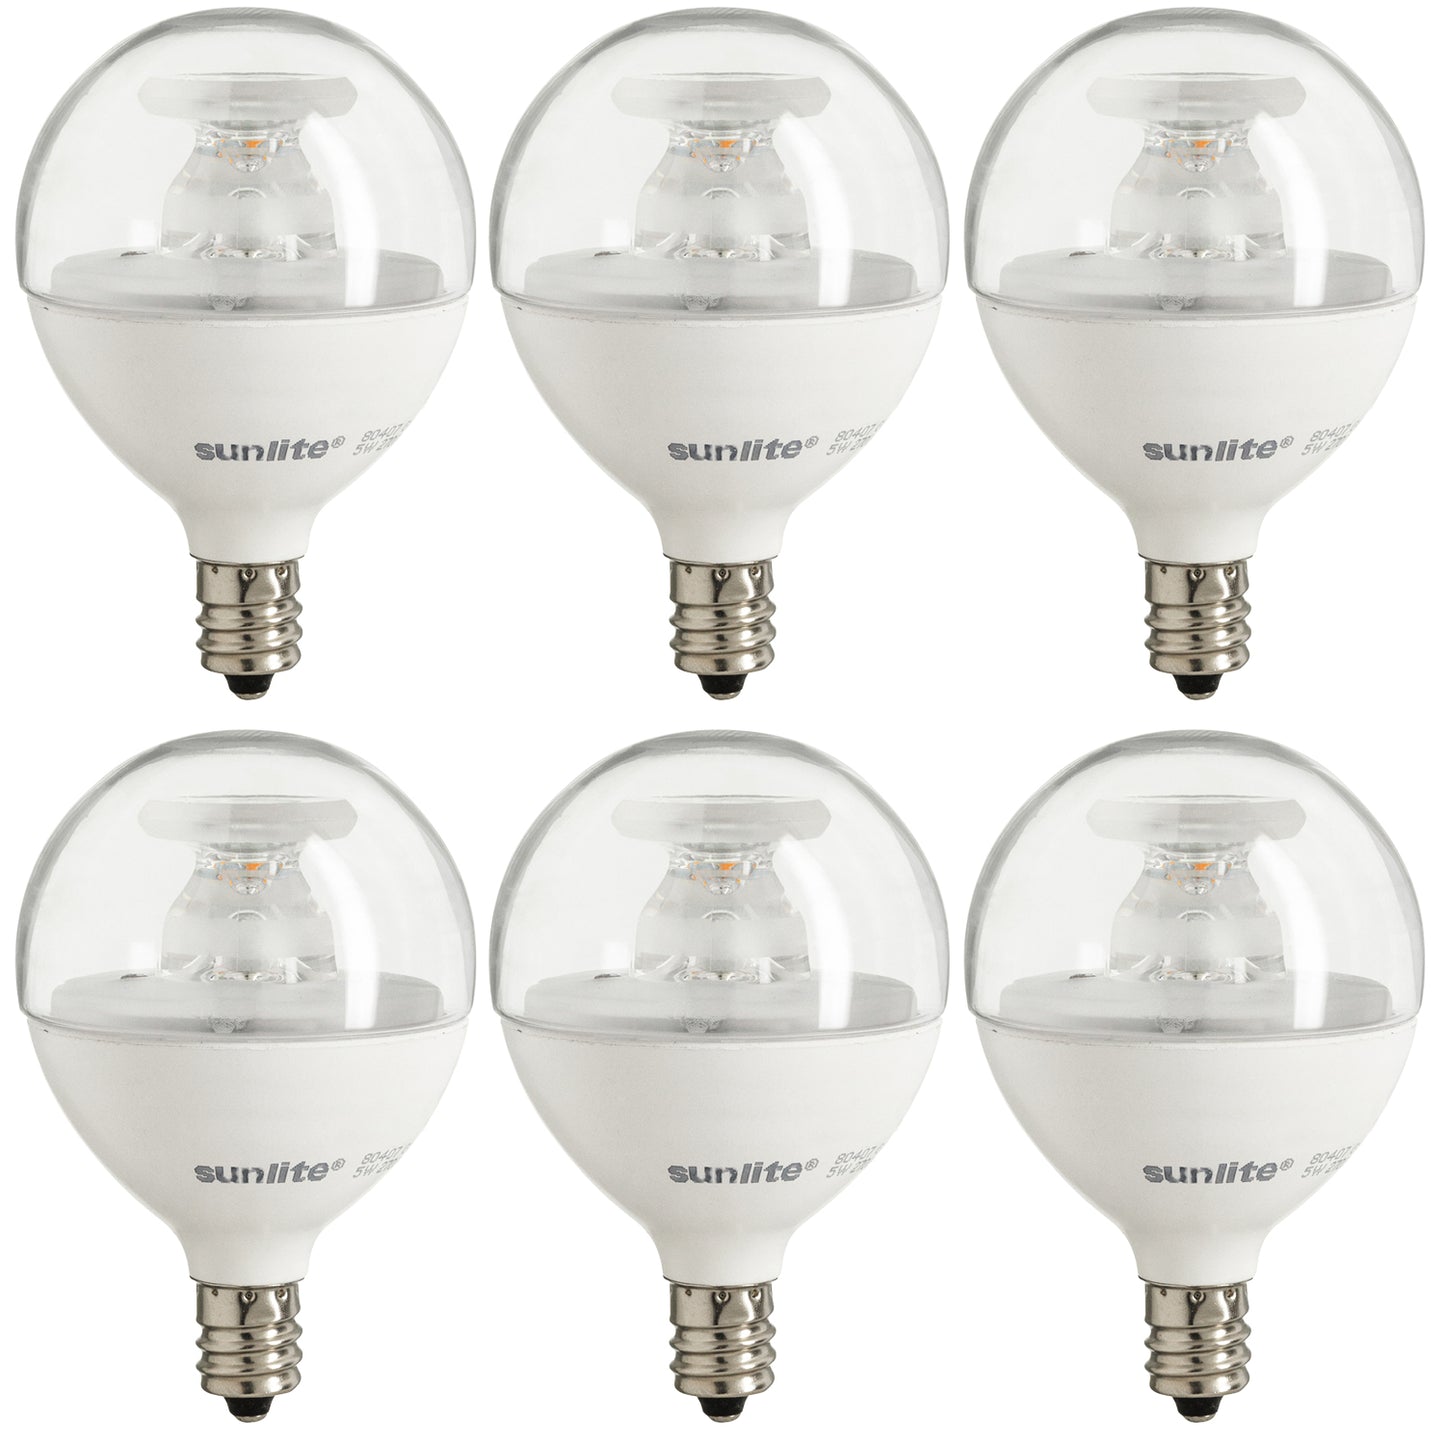 Sunlite 40294 LED G16.5 Globe Light Bulb, 5 Watts (40W Equivalent), 350 Lumens, Dimmable, Candelabra E12 Base, Short Bulbs, Vanity Bulbs, Energy Star Listed, Clear, 6 Count